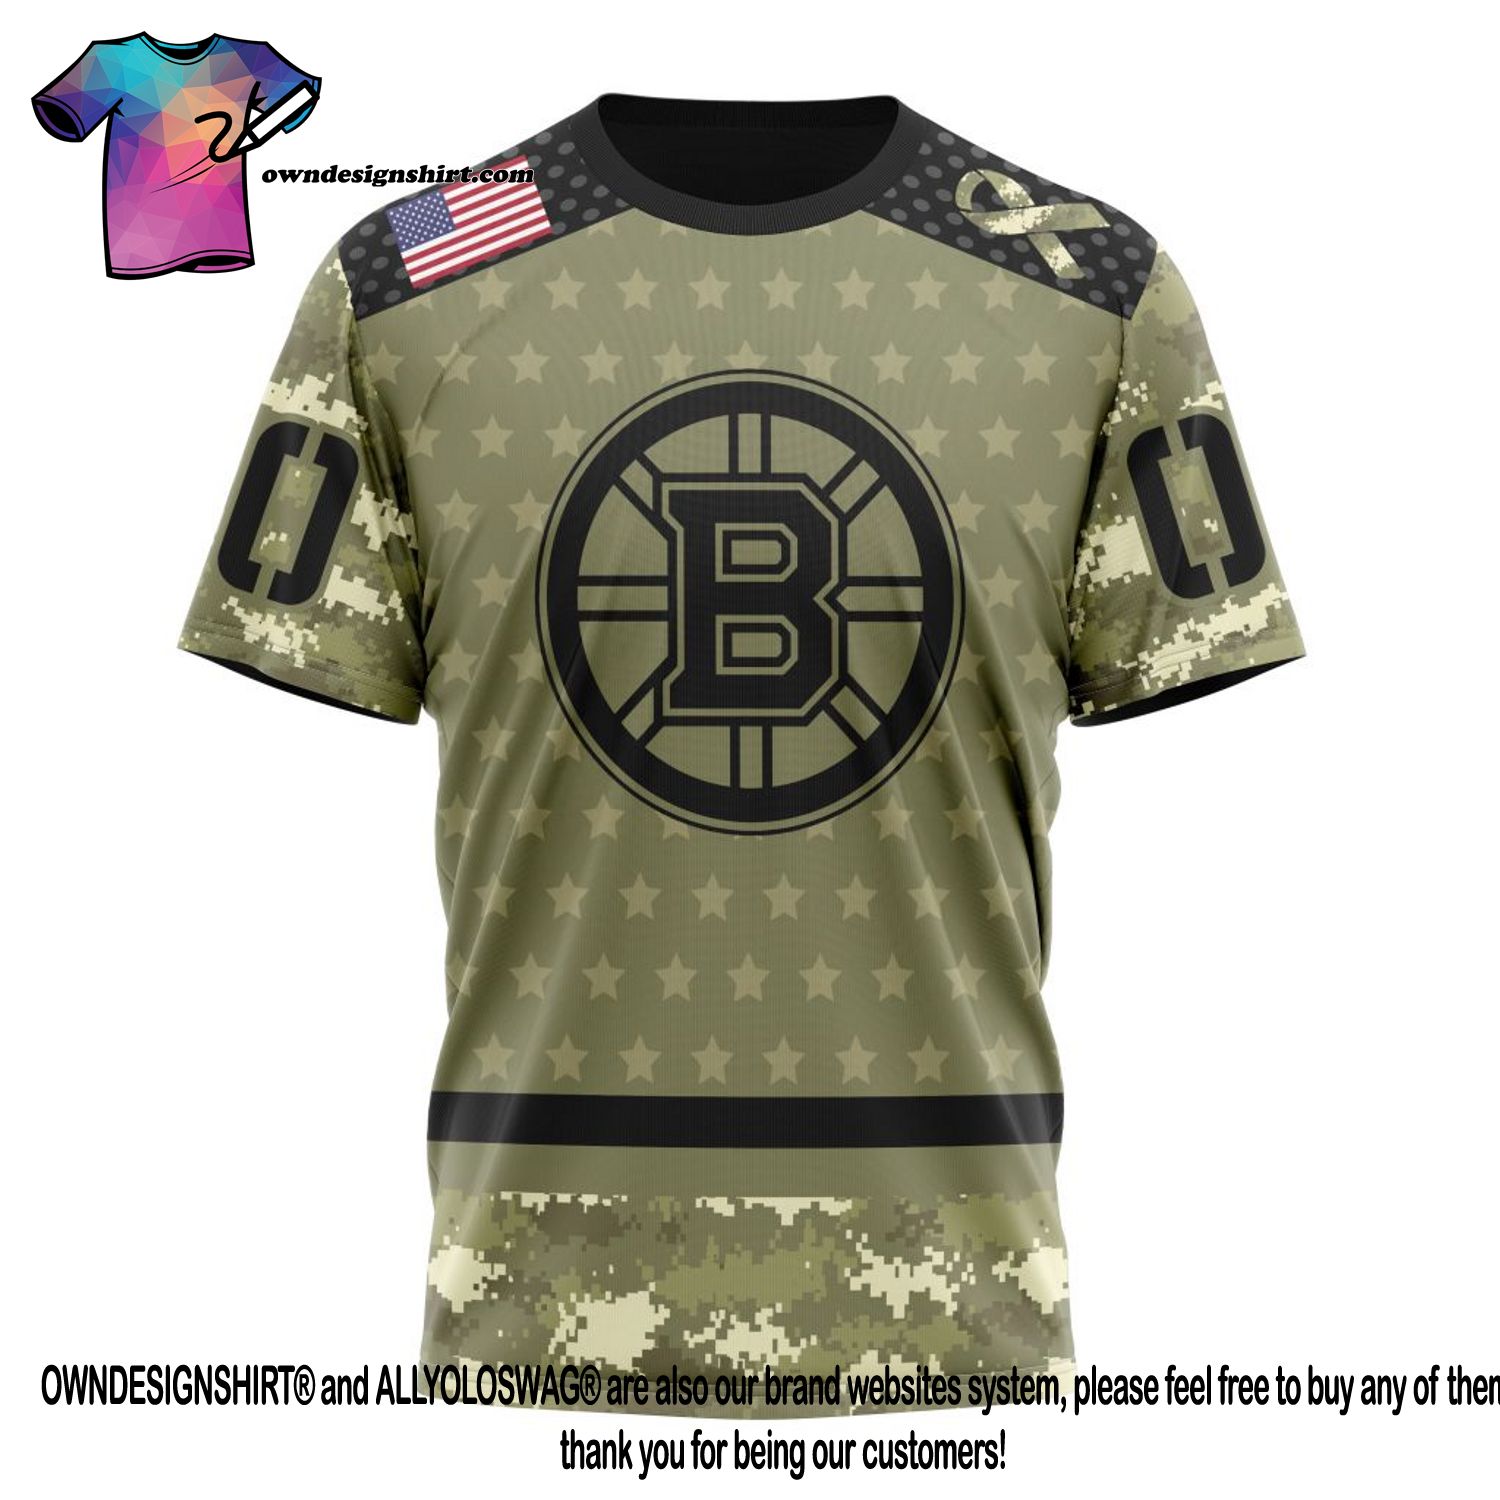 Camo jerseys for Veteran's Day  Boston bruins, Bruins hockey